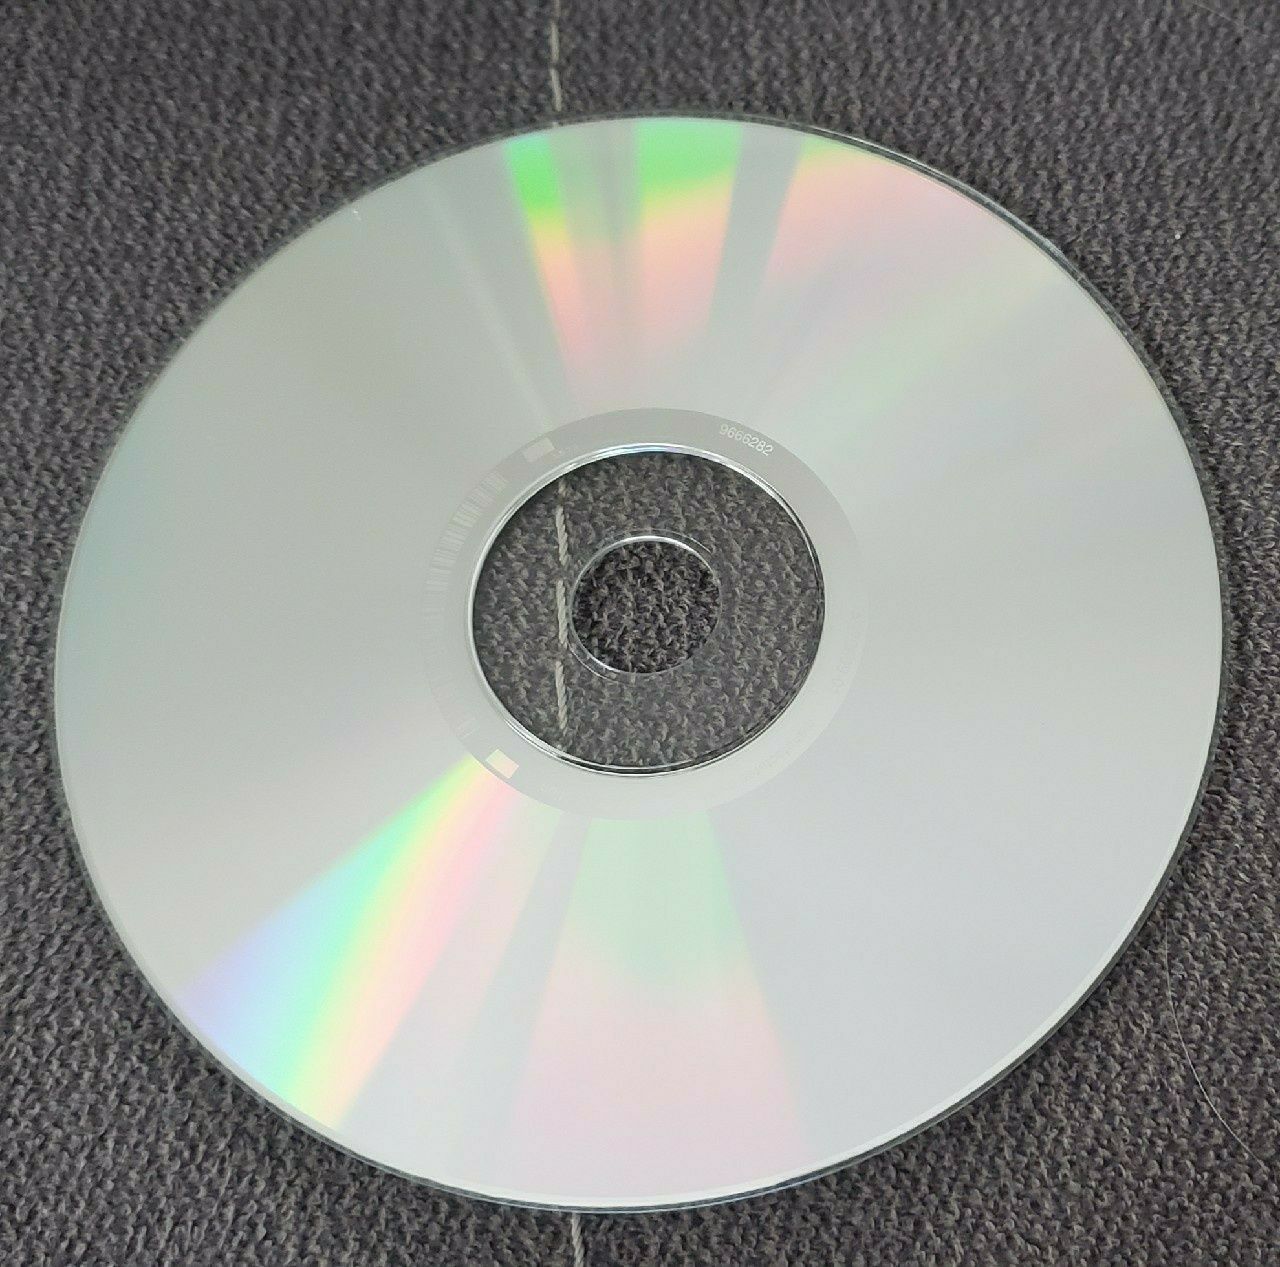 Depeche Mode Peace Remixes CD Single Limited Edition LCDBONG 41